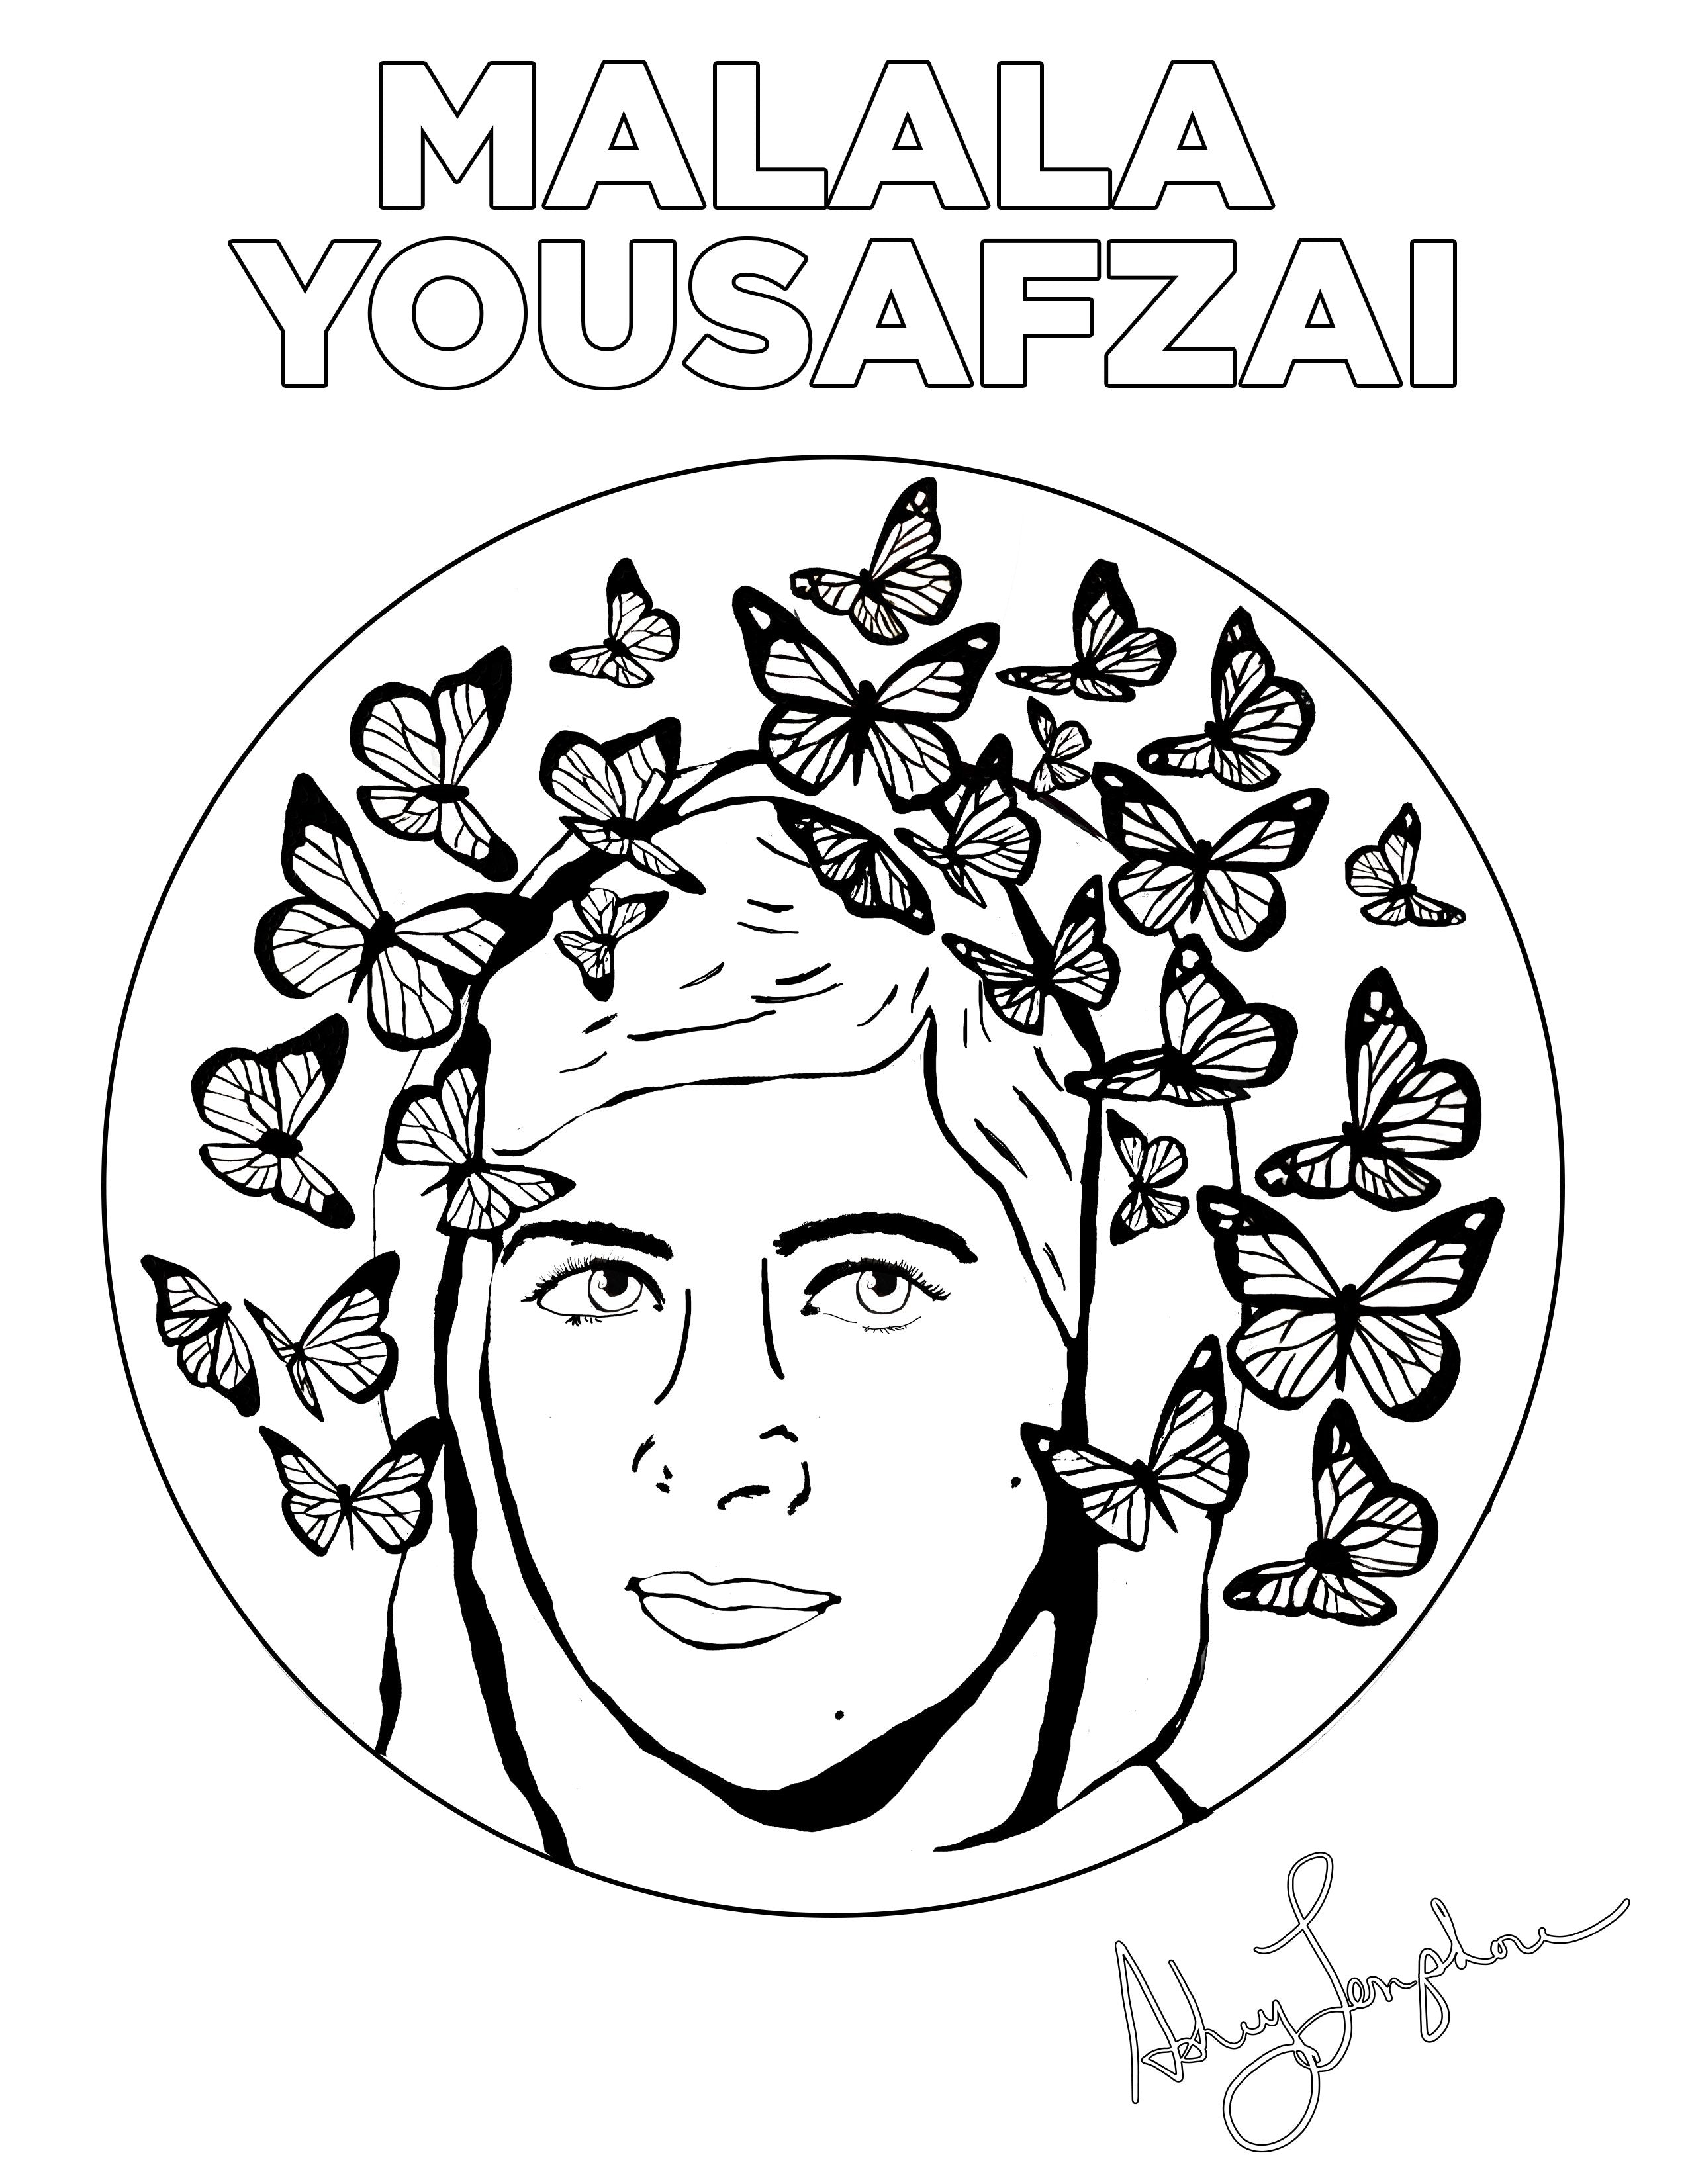 Ashley Longshore coloring pages featuring Malala Yousafzai.